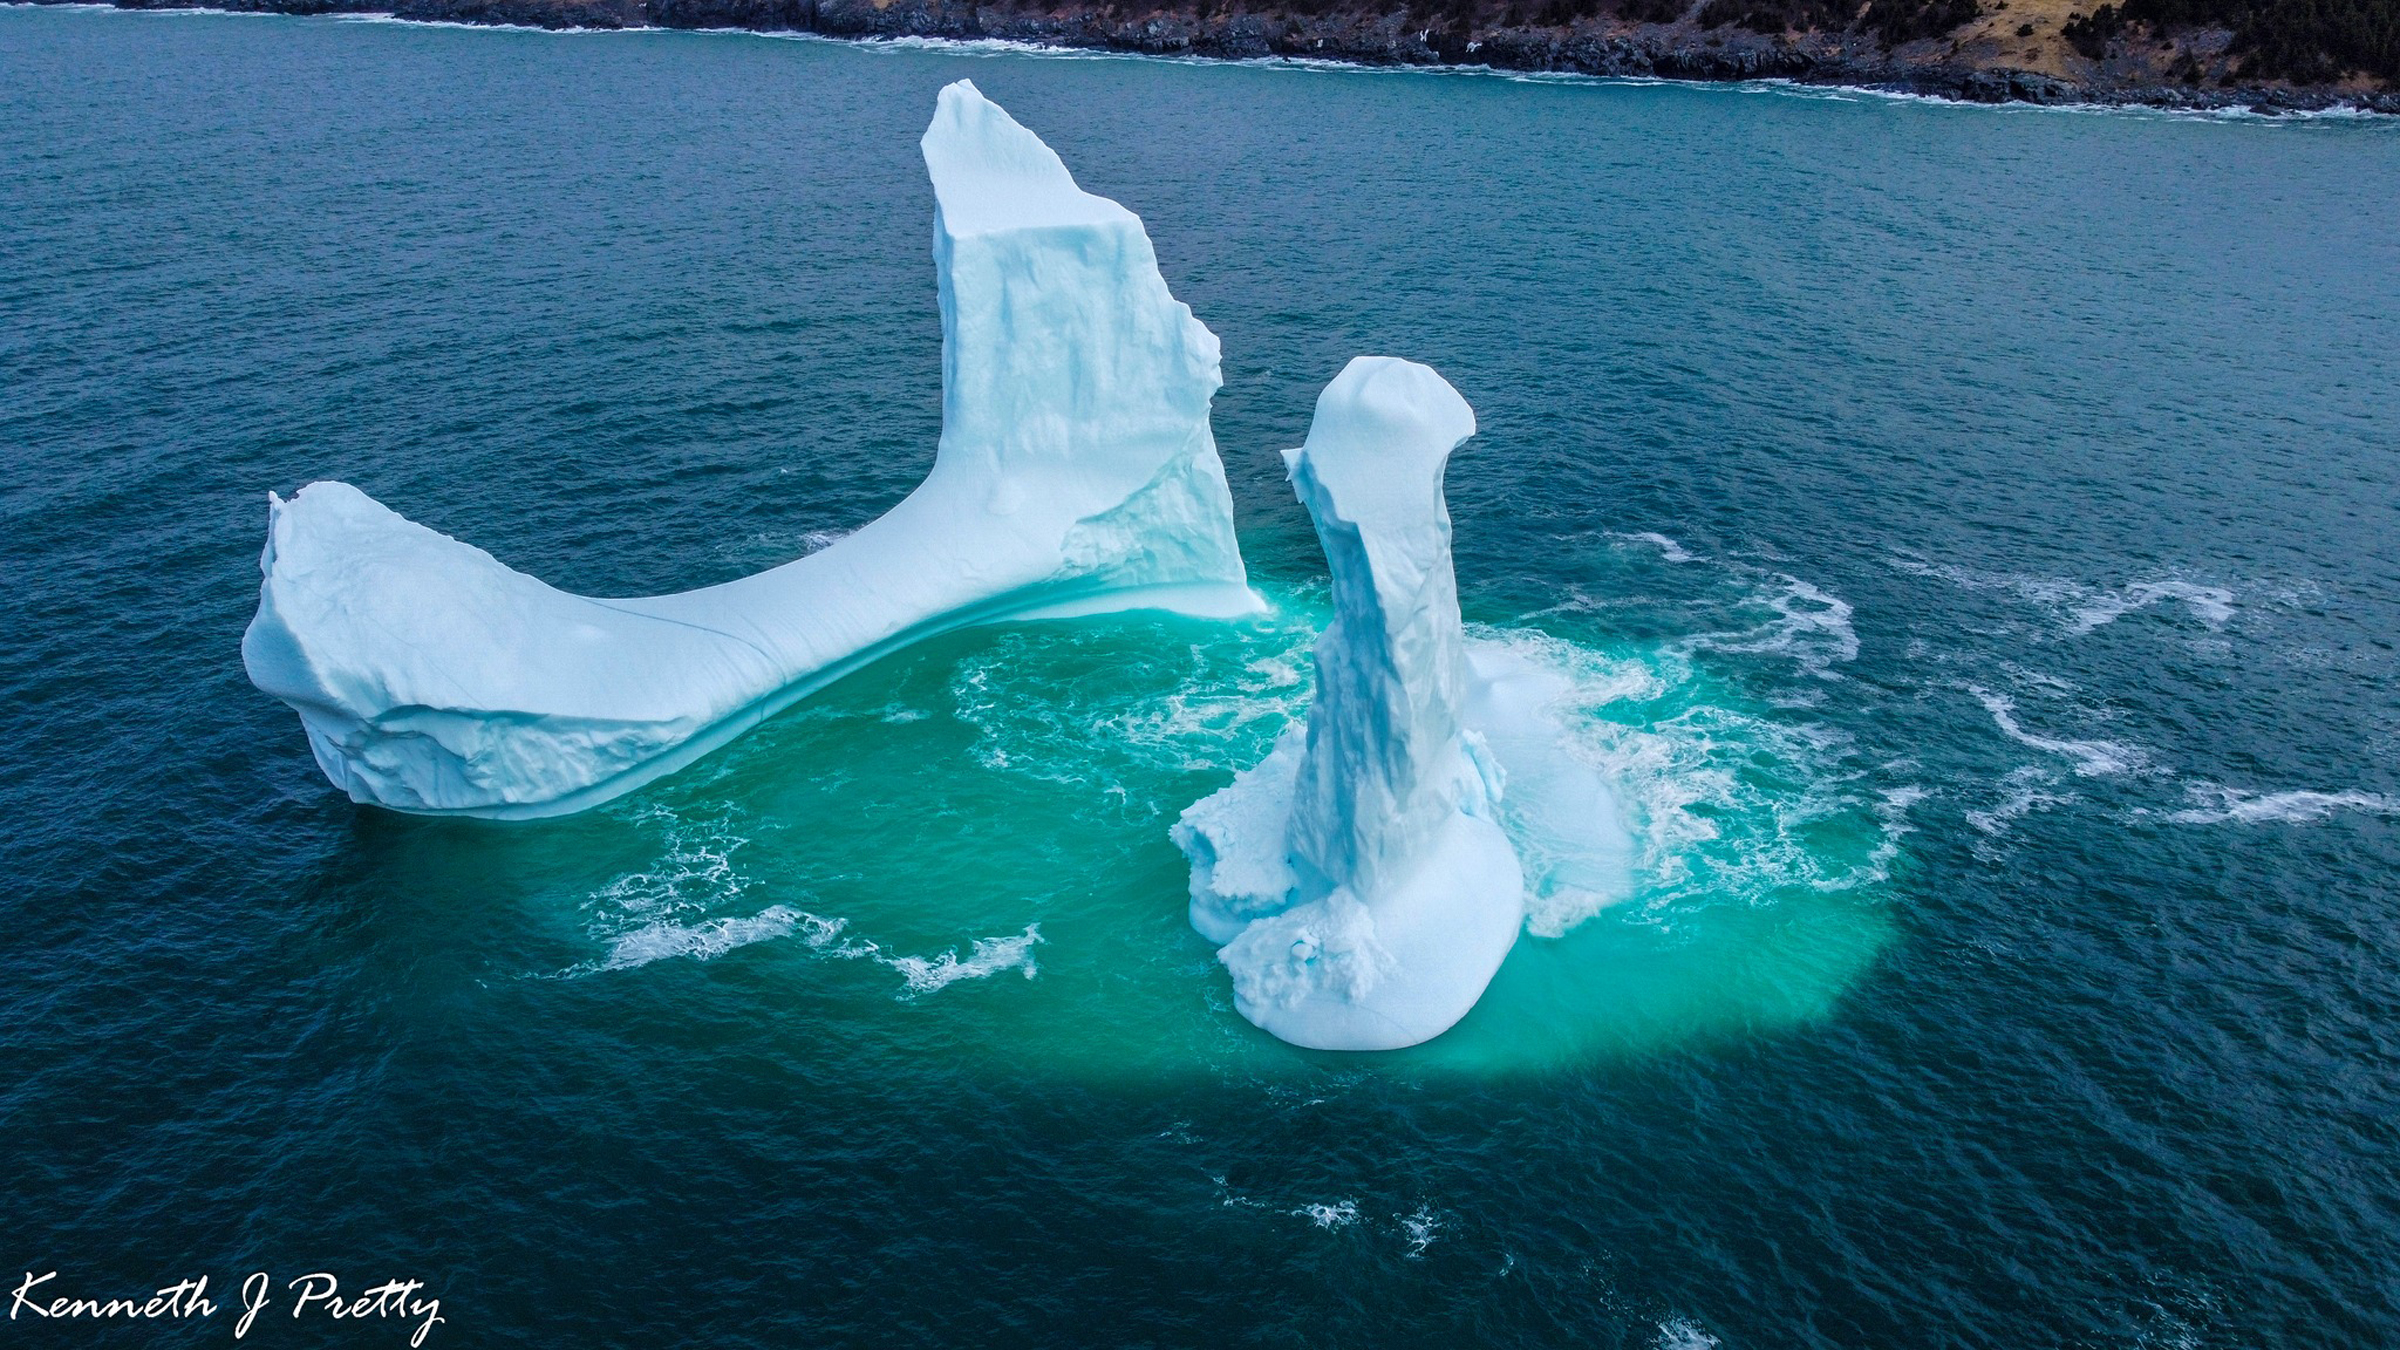 The phallus-shaped iceberg floats near a shoal-shaped berg in the water near the coast.